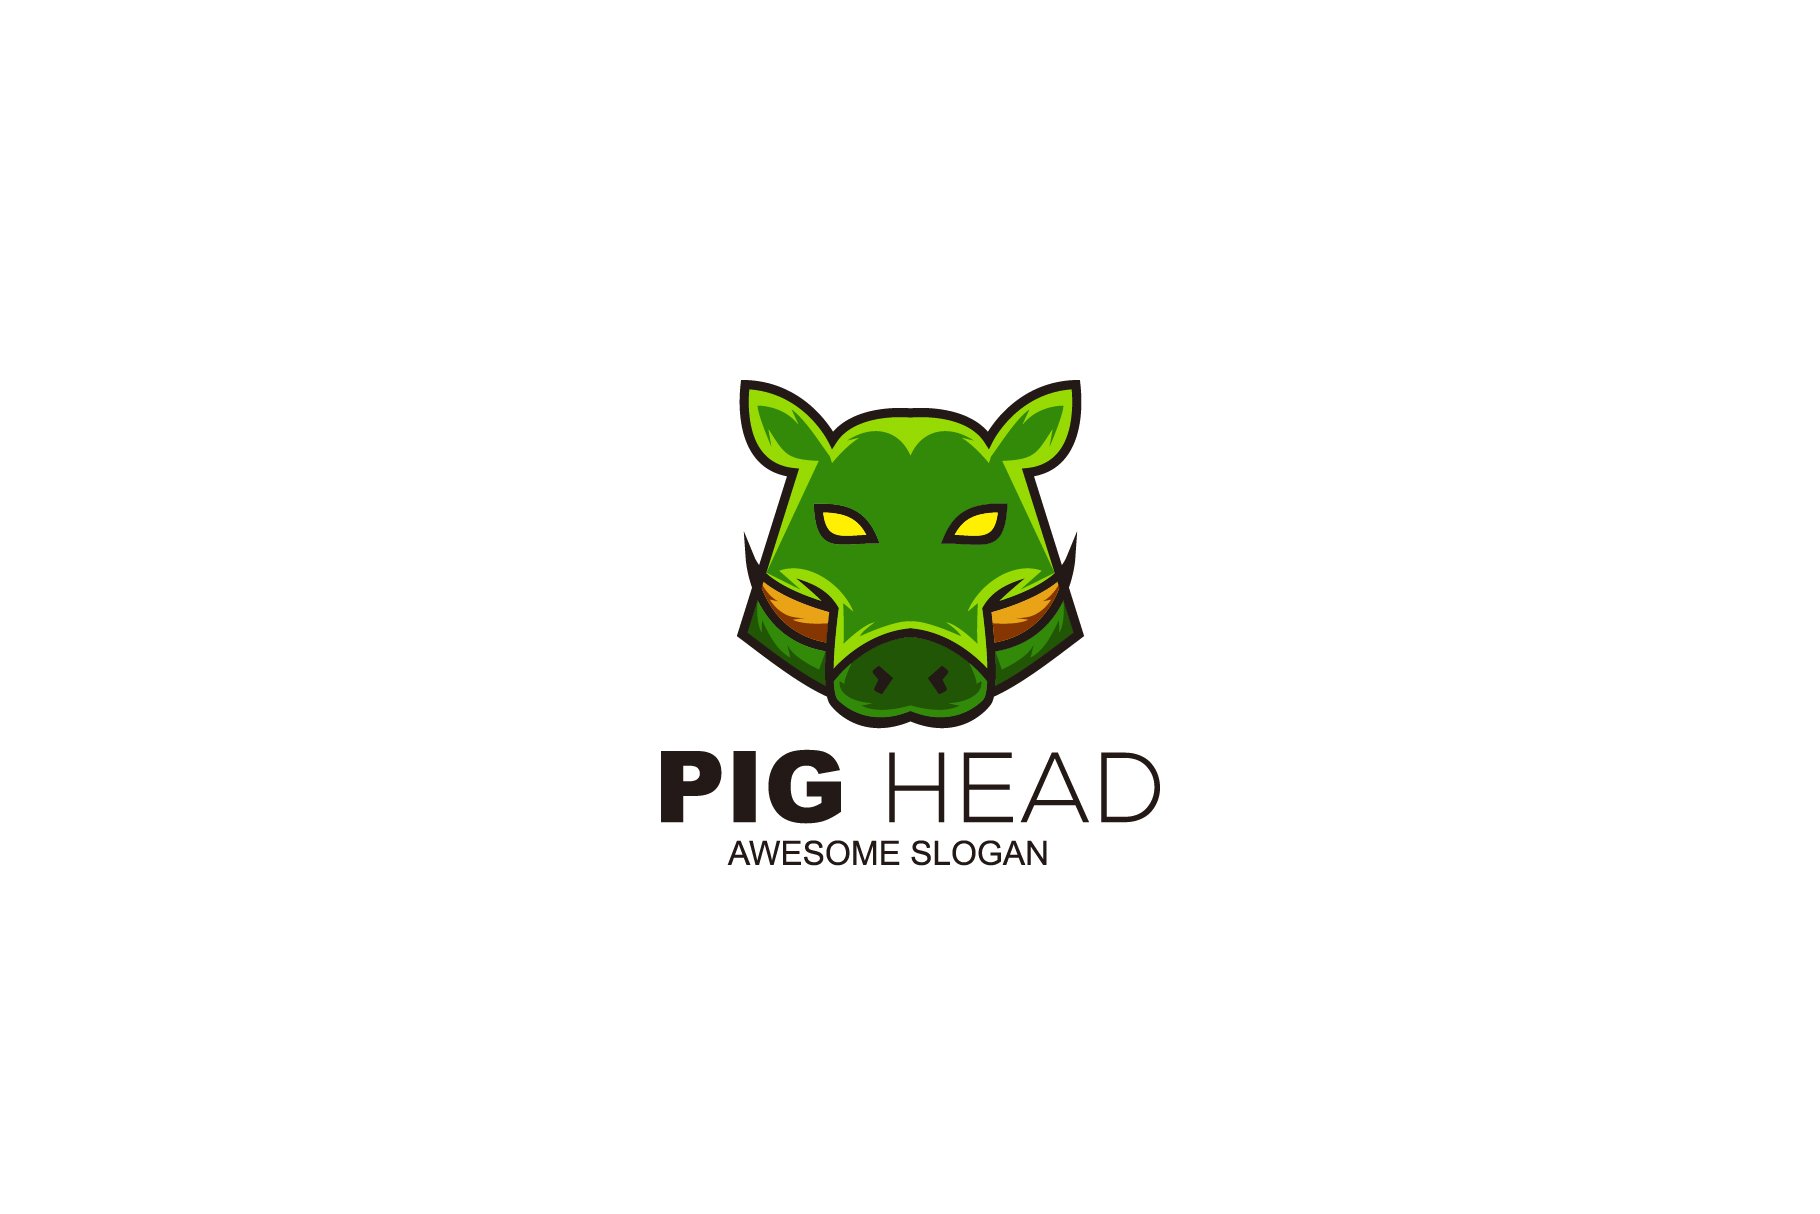 pig head logo symbol vector design cover image.